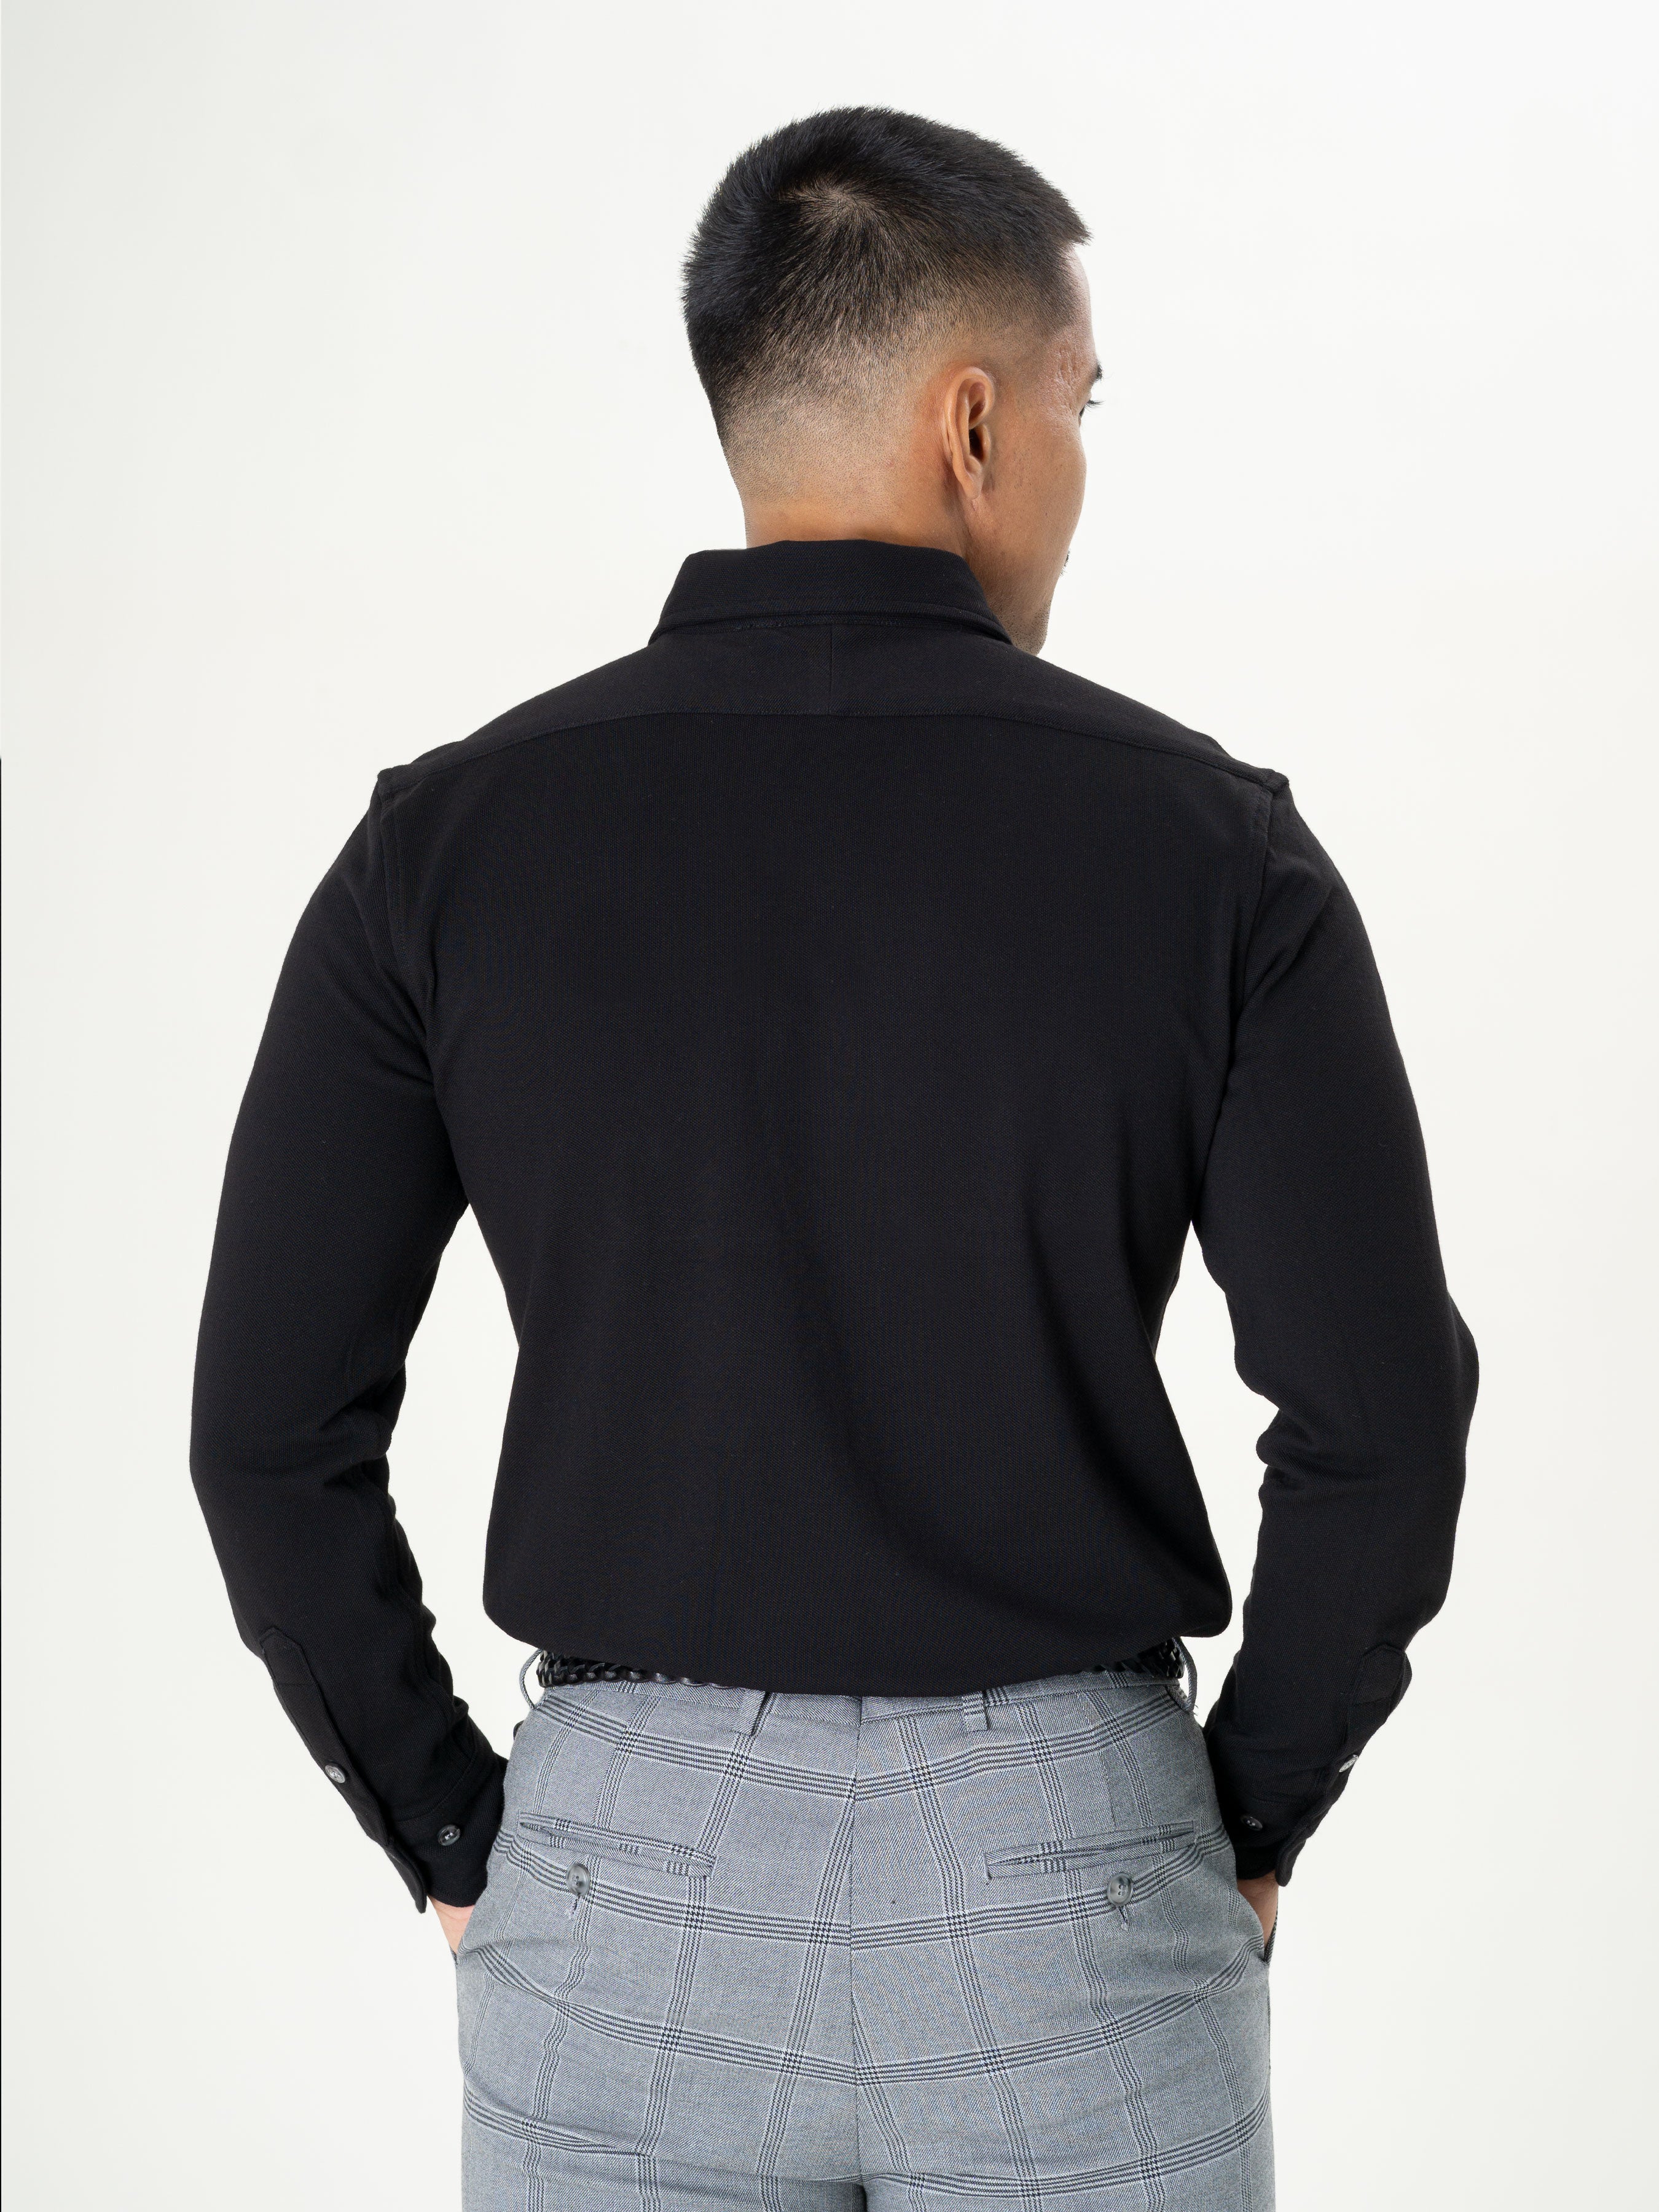 Long Sleeve Polo Shirt - Black Button Down - Zeve Shoes